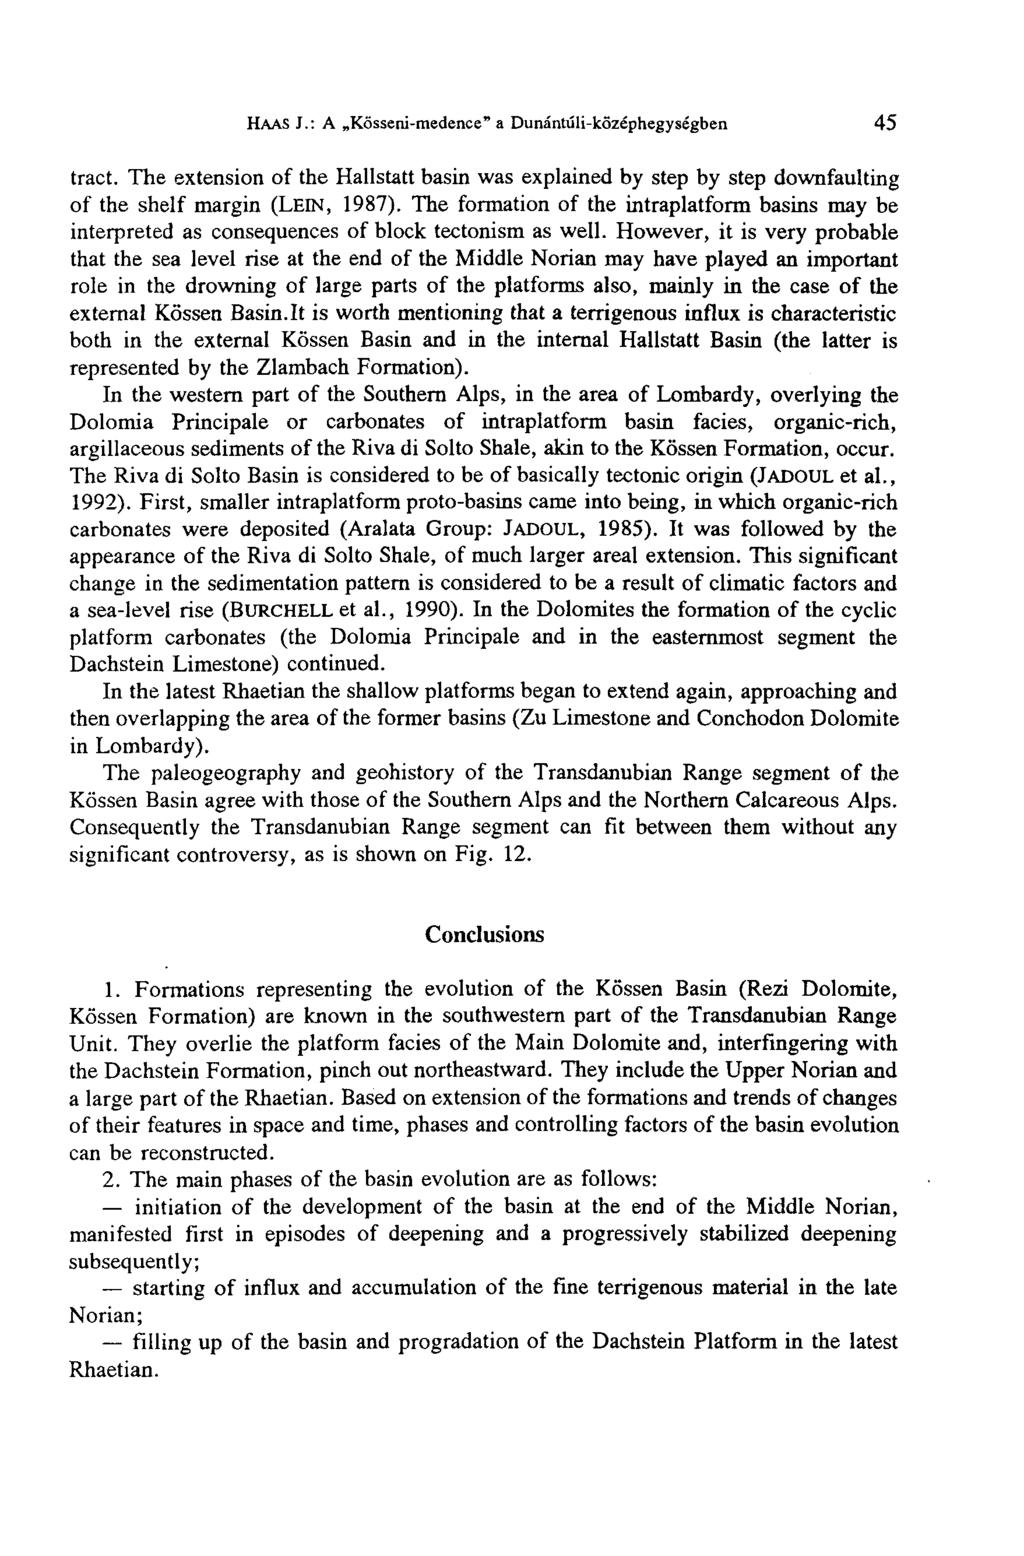 HAAS J.: A Kösseni-medence* a Dunántúli-középhegységben 45 tract. The extension of the Hallstatt basin was explained by step by step downfaulting of the shelf margin (LEIN, 1987).